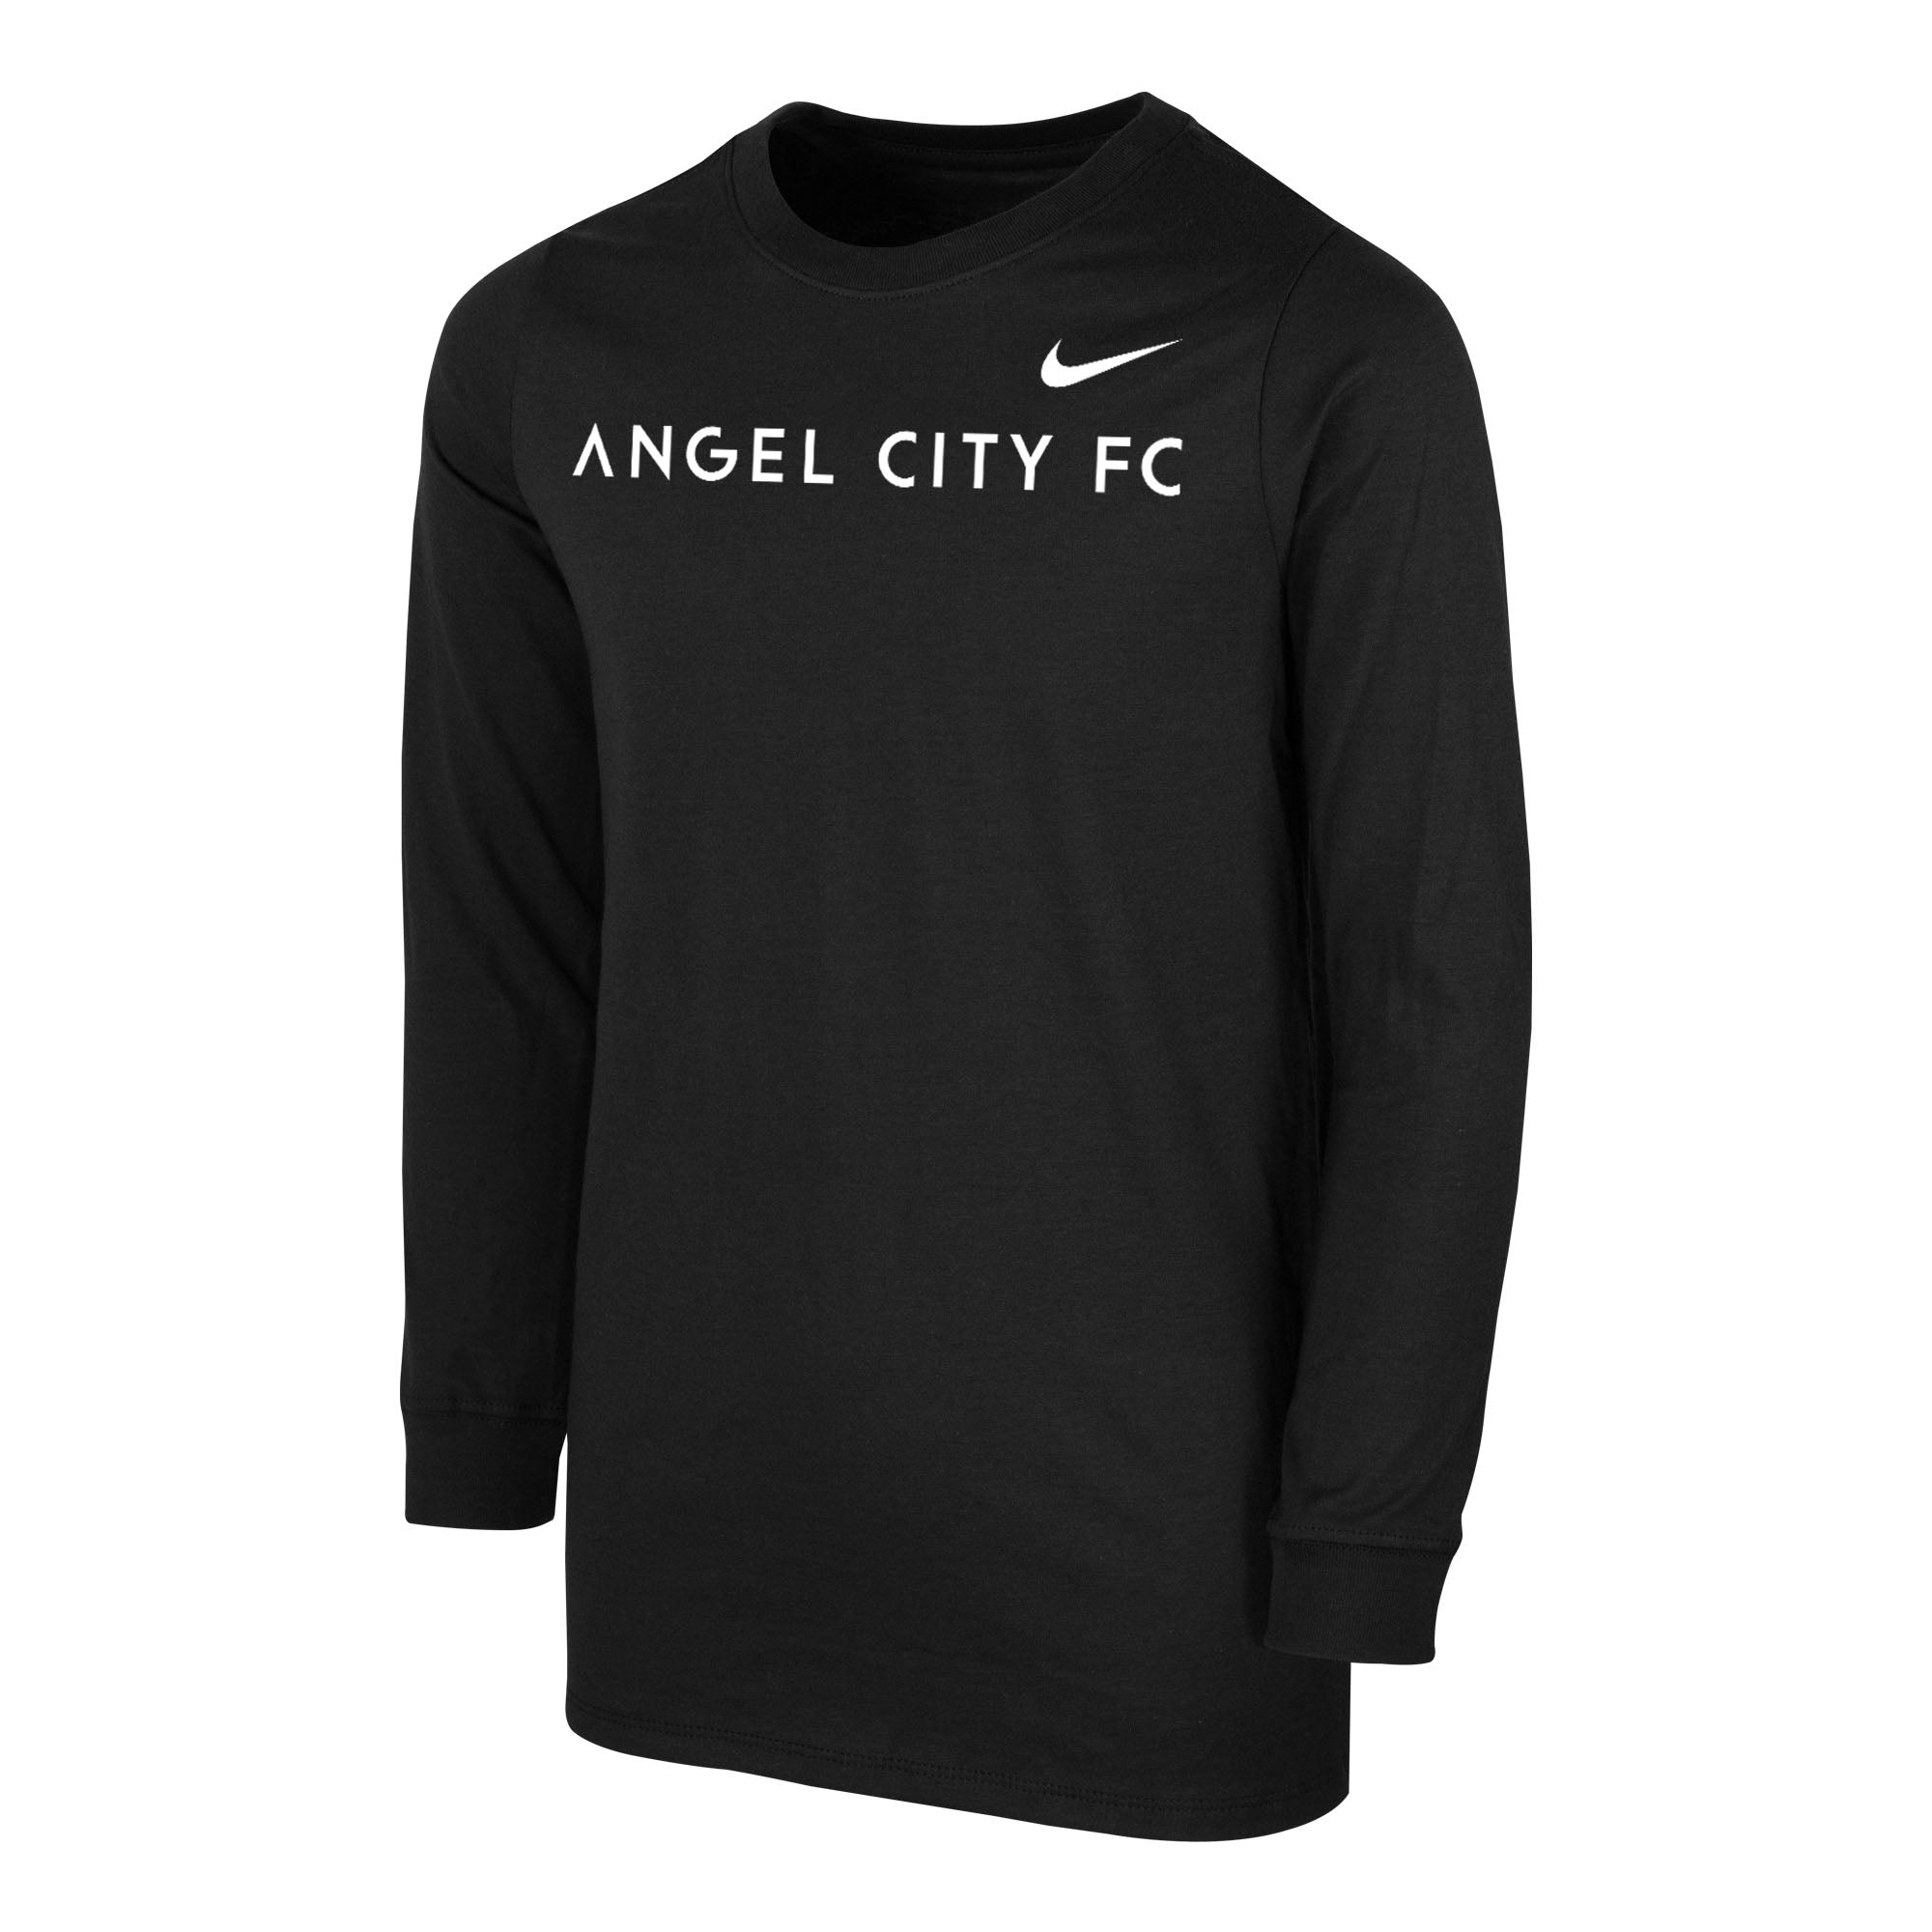 Angel City FC Nike Youth Black Long Sleeve T-Shirt